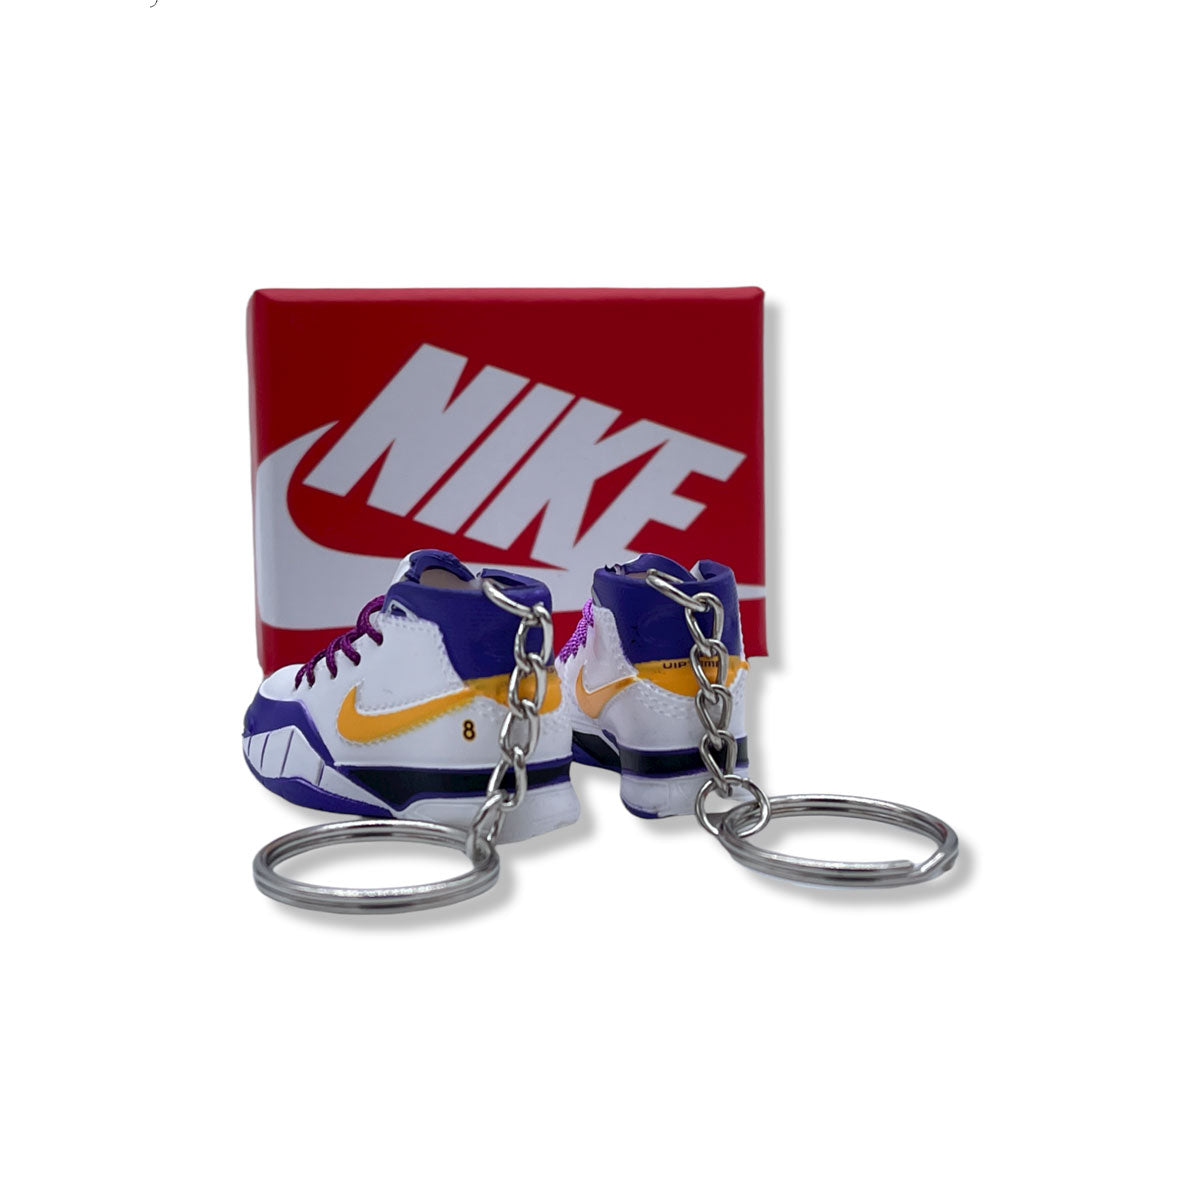 3D Sneaker Keychain - Nike Kobe 1 Protro Think 16  Pair